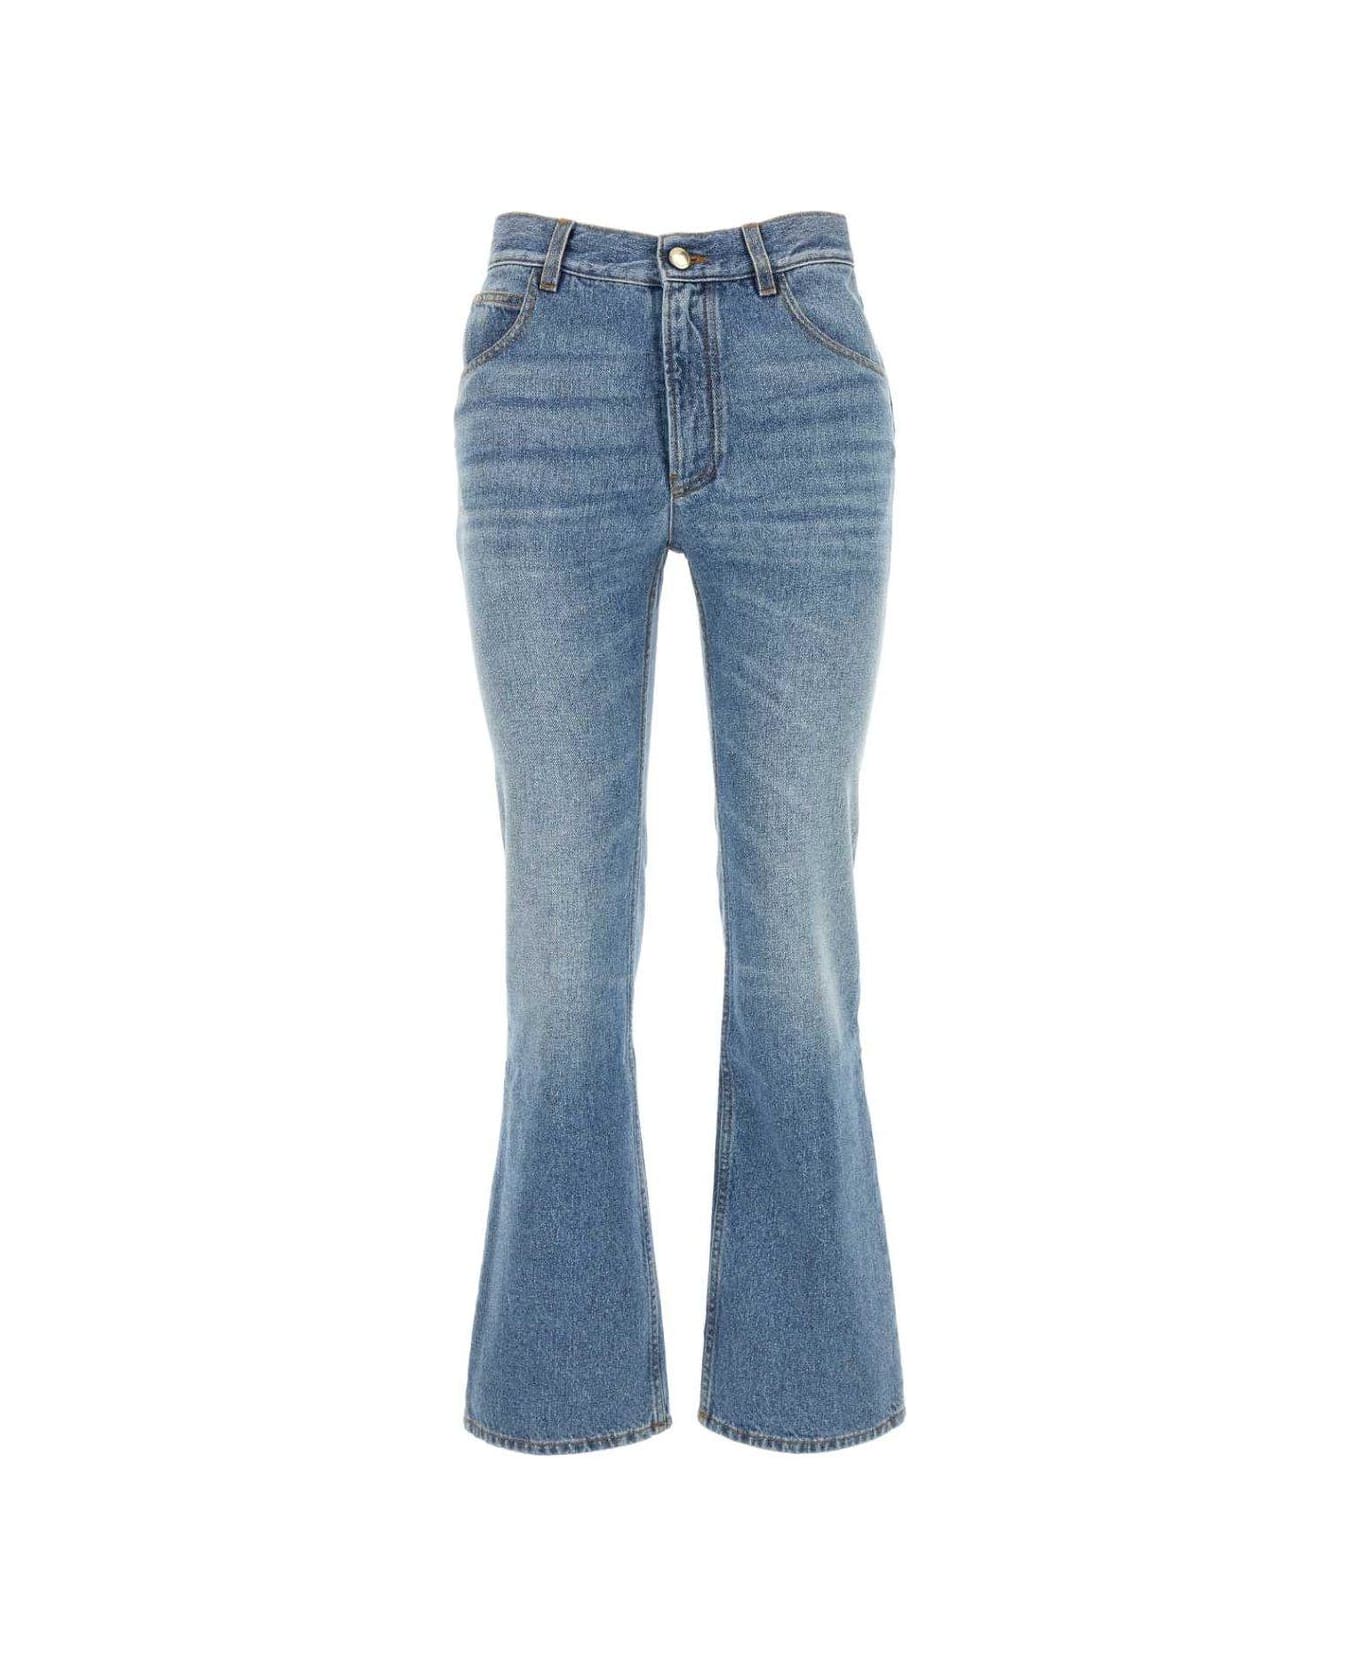 Chloé Cropped Bootcut Jeans - Denim